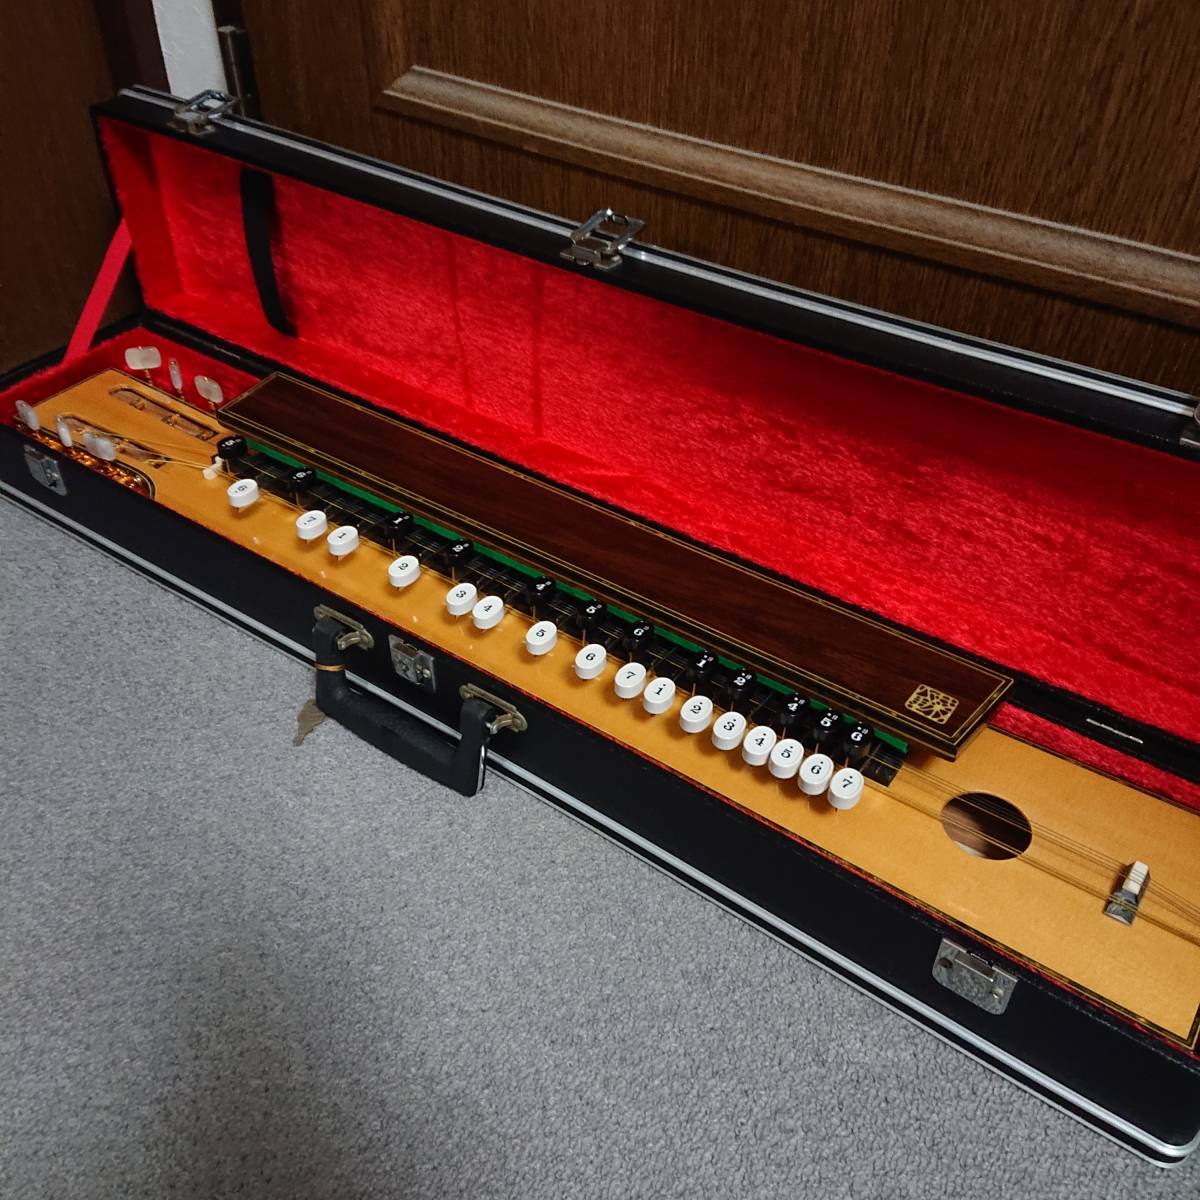 ヤフオク! - 大正琴(和楽器 楽器、器材)の中古品・新品・未使用品一覧